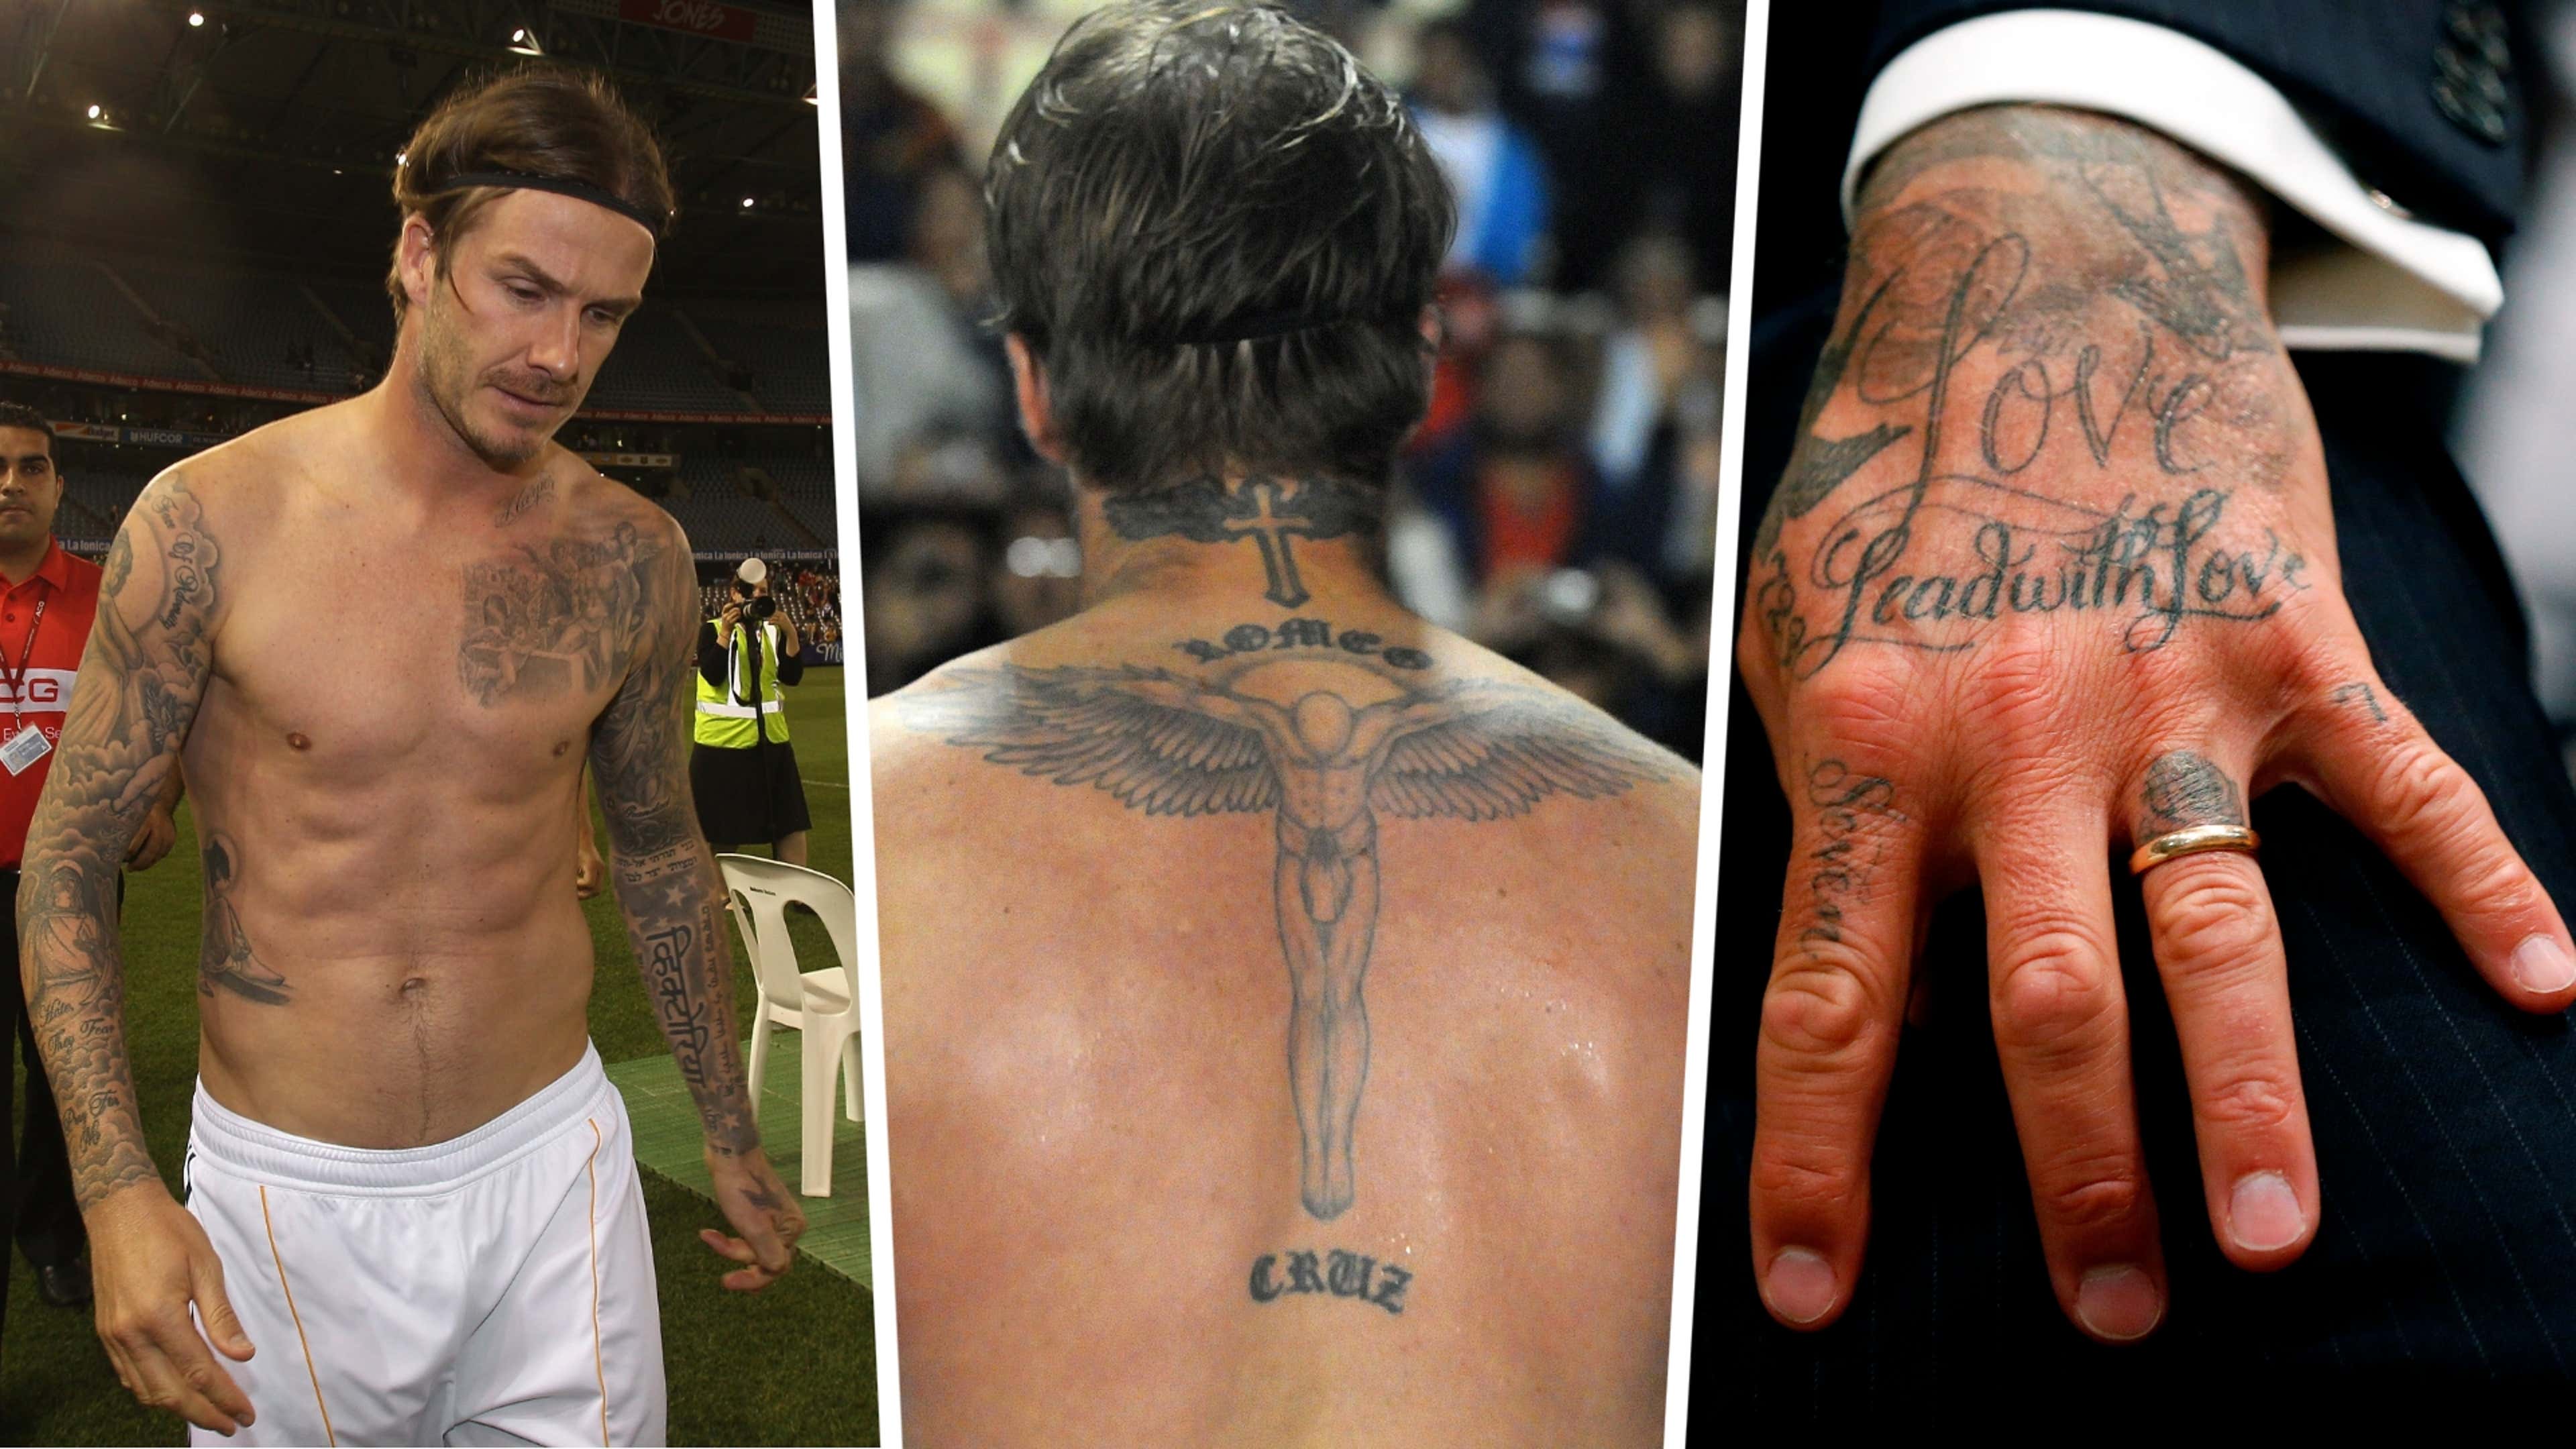 Celeb/Athlete Tattoos on Instagram: Just the beginning